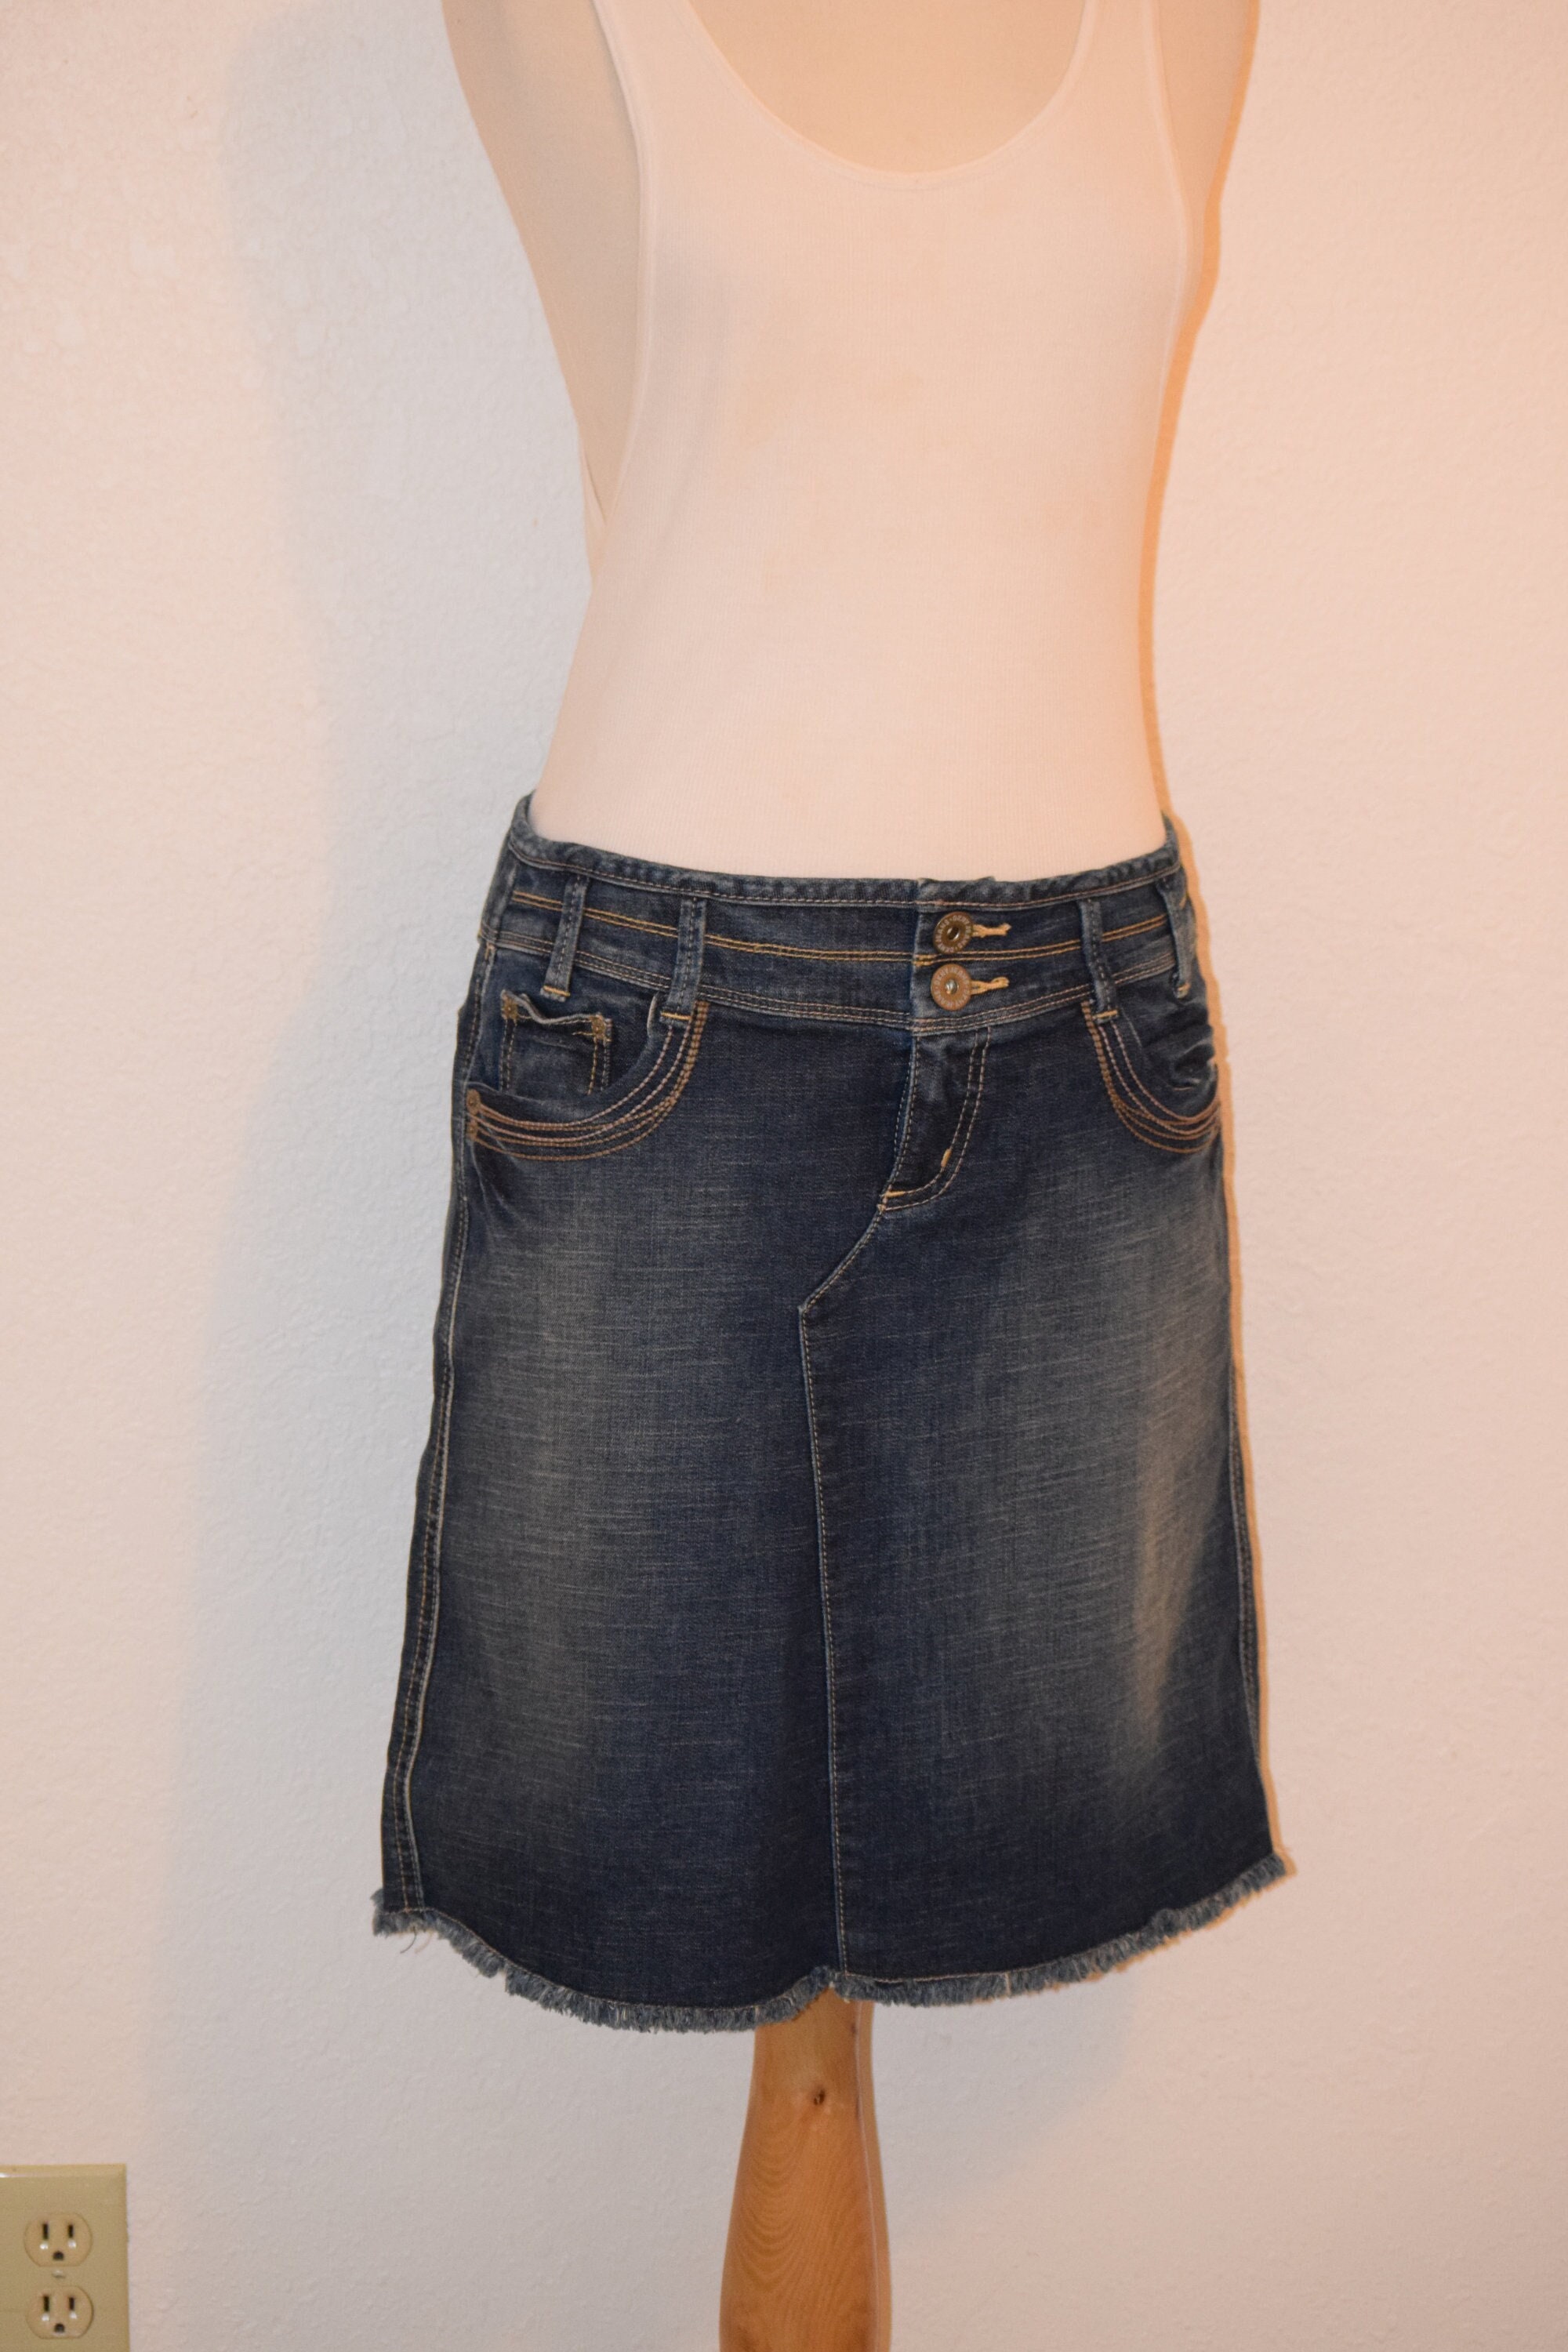 Throw Back 'DKNY Jeans' Medium Washed Denim Skirt With Frayed Hem / Western Denim  Skirt / Summer Festival Skirt Size 8 / Medium - Etsy